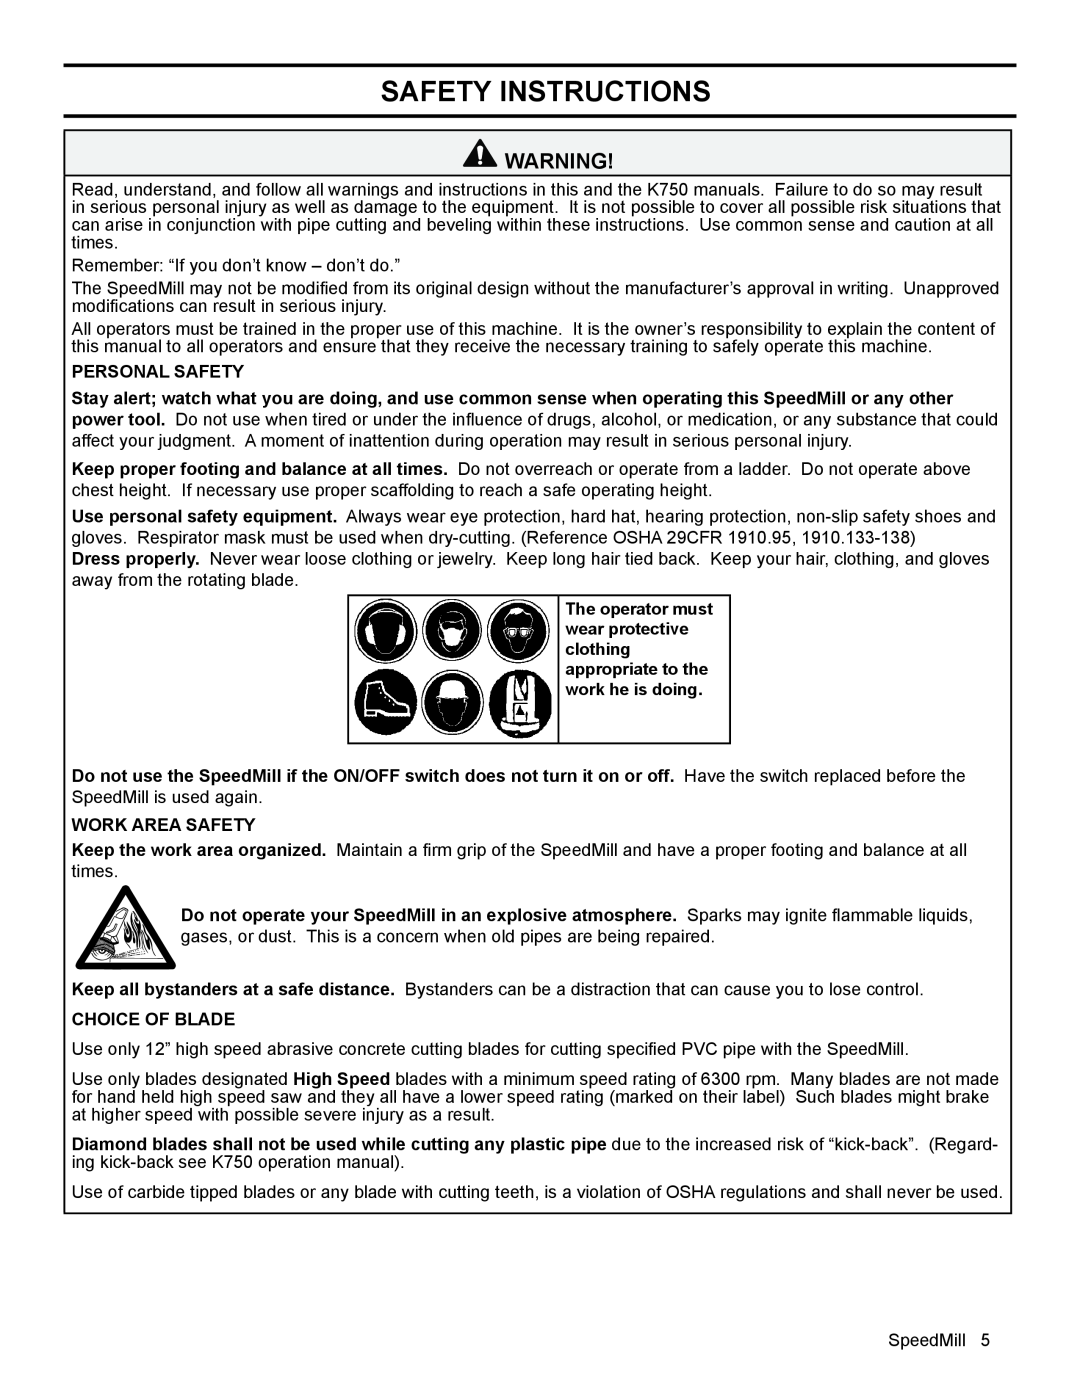 Husqvarna K 750 manual Safety Instructions, Personal Safety 